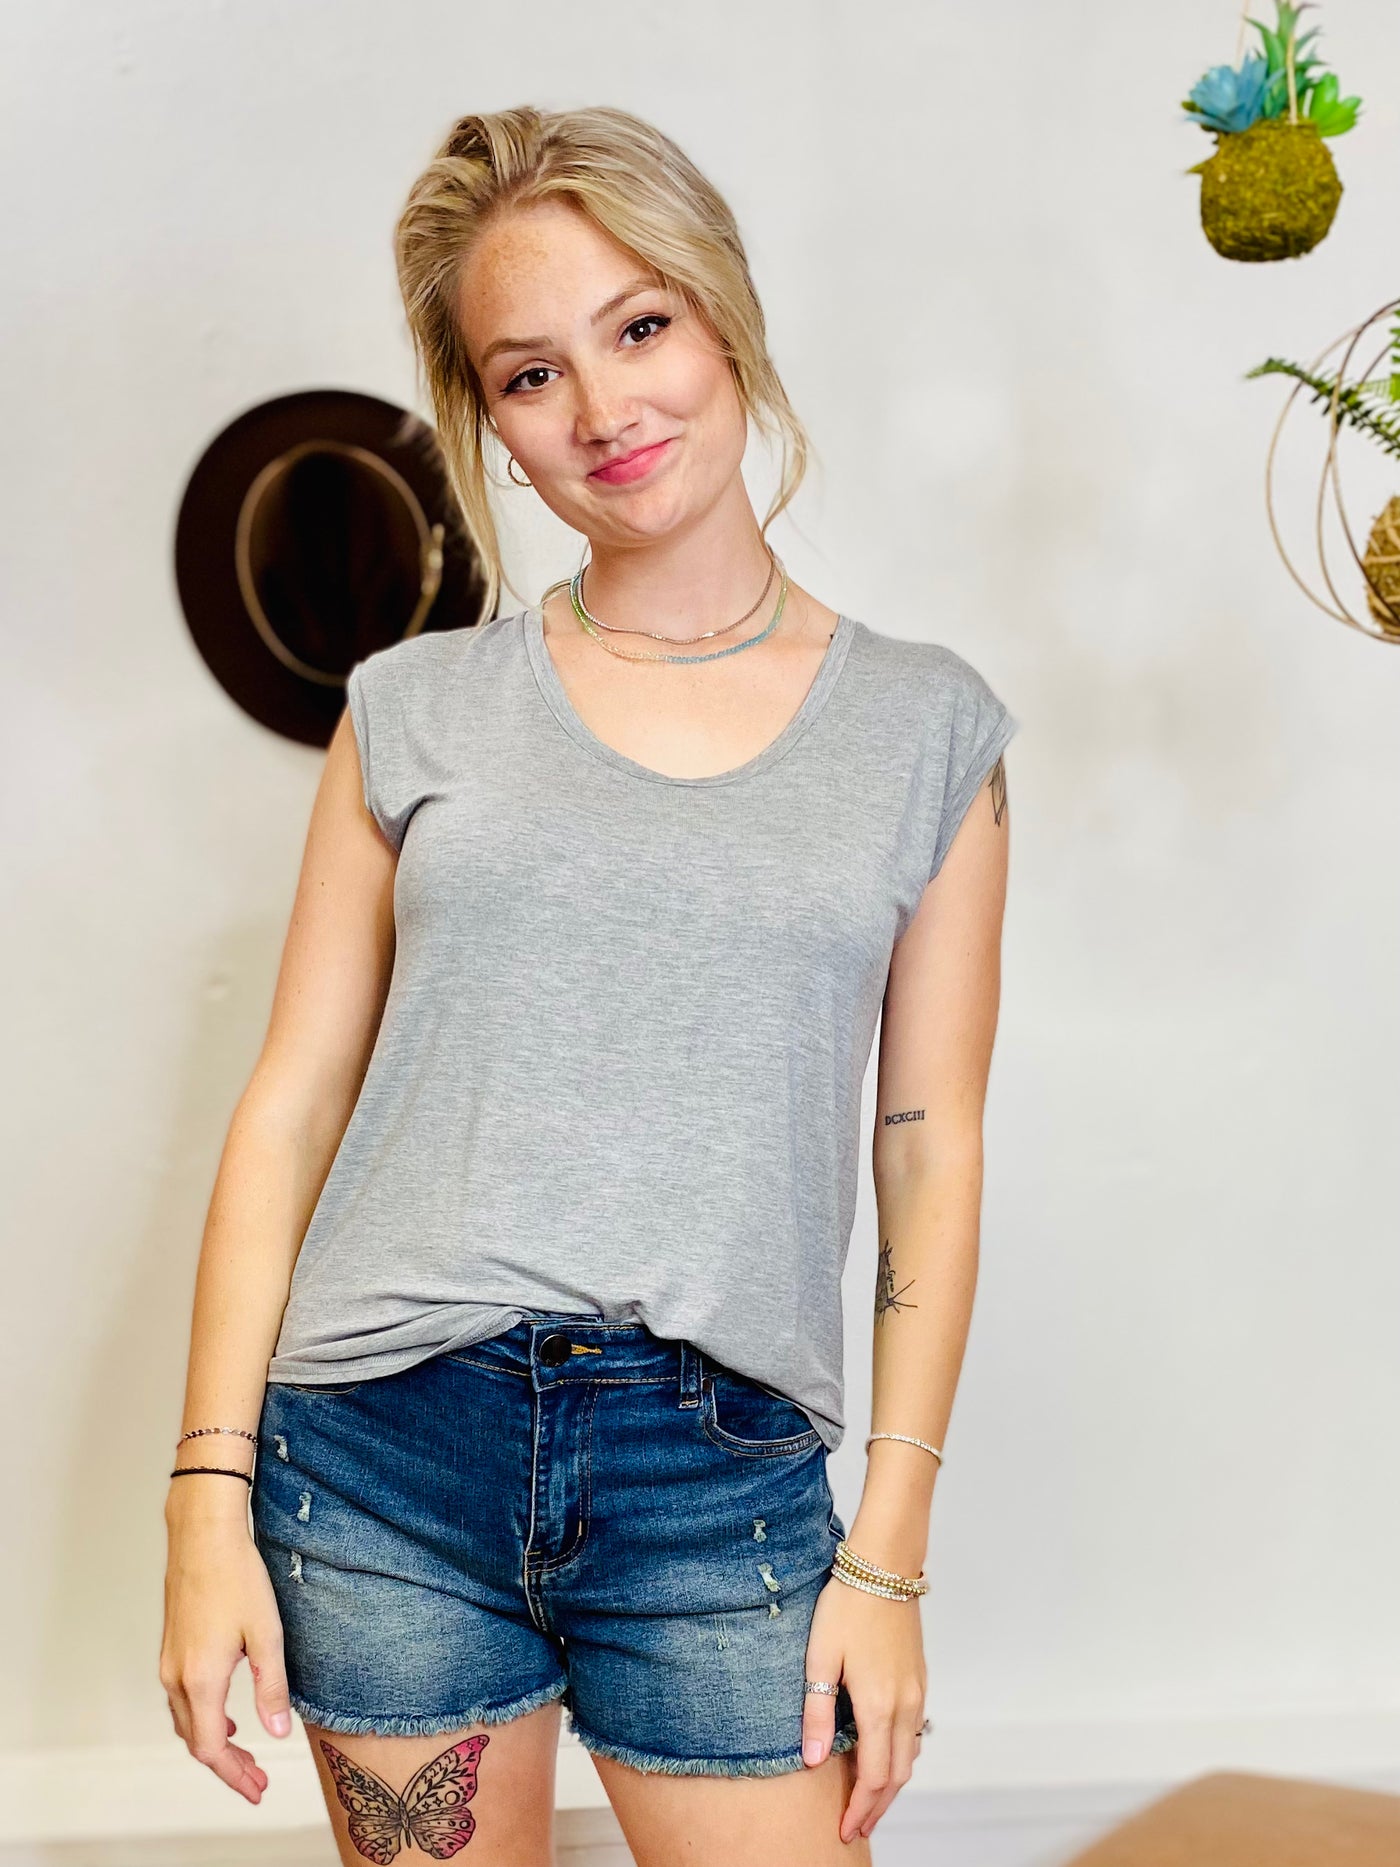 Katelynn Cap Sleeve Top KINDOM-Tops-Anatomy Clothing Boutique in Brenham, Texas